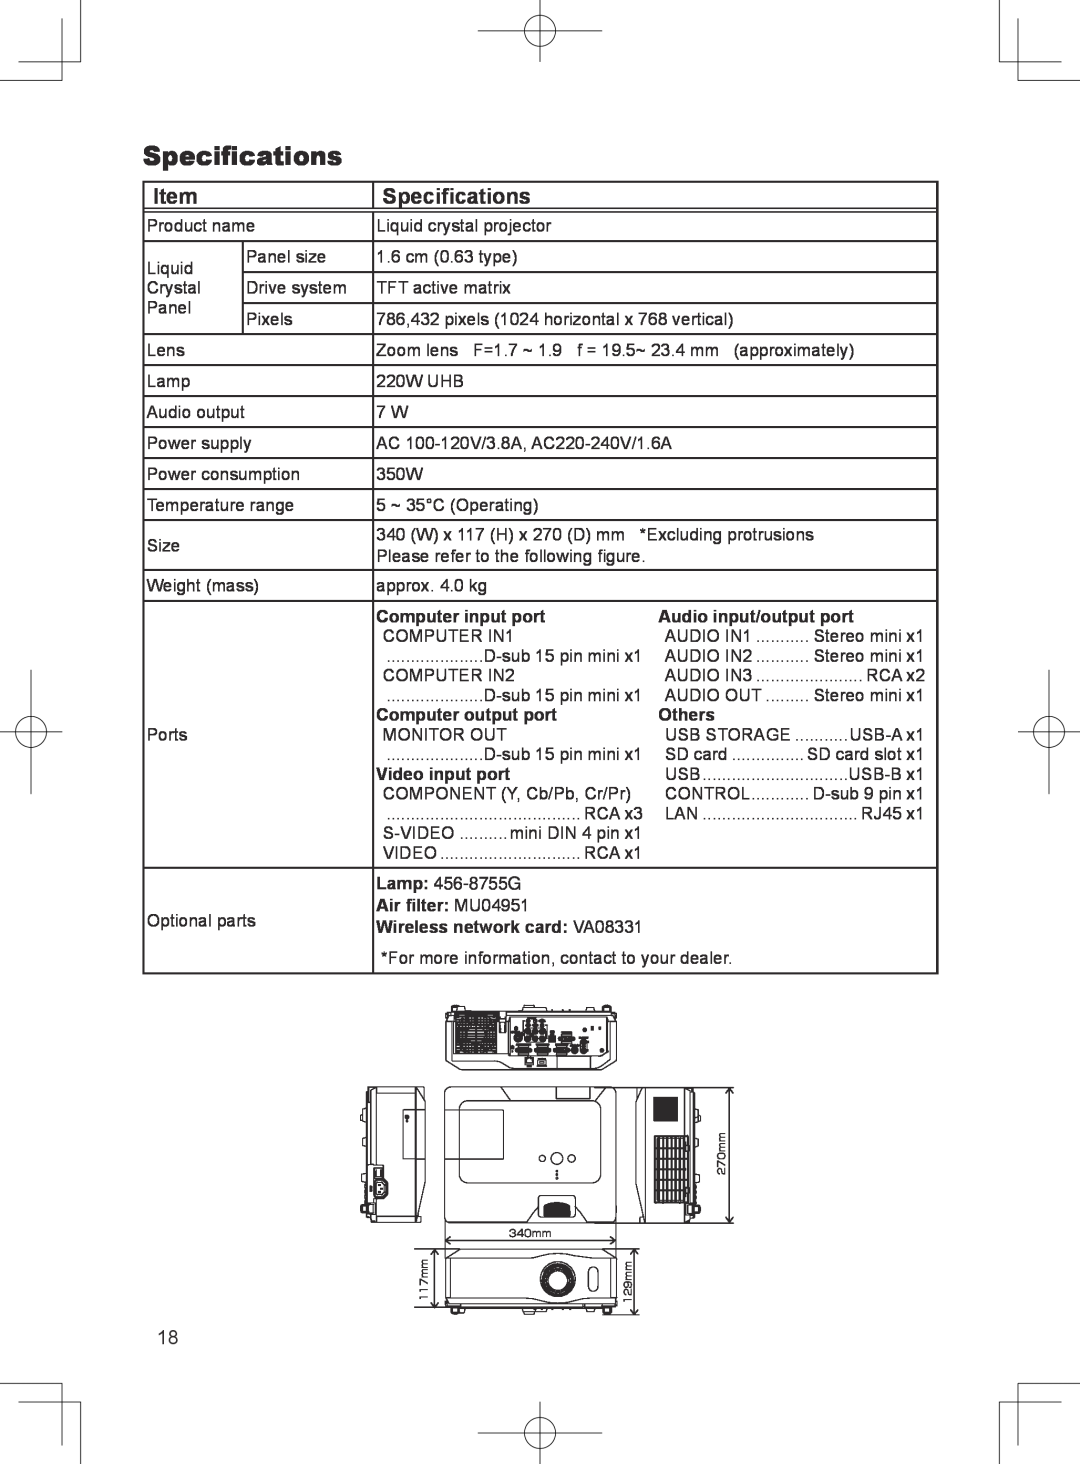 Dukane 8781 Specifications, Computer input port, Computer output port, Others, Video input port, Air filter MU04951 